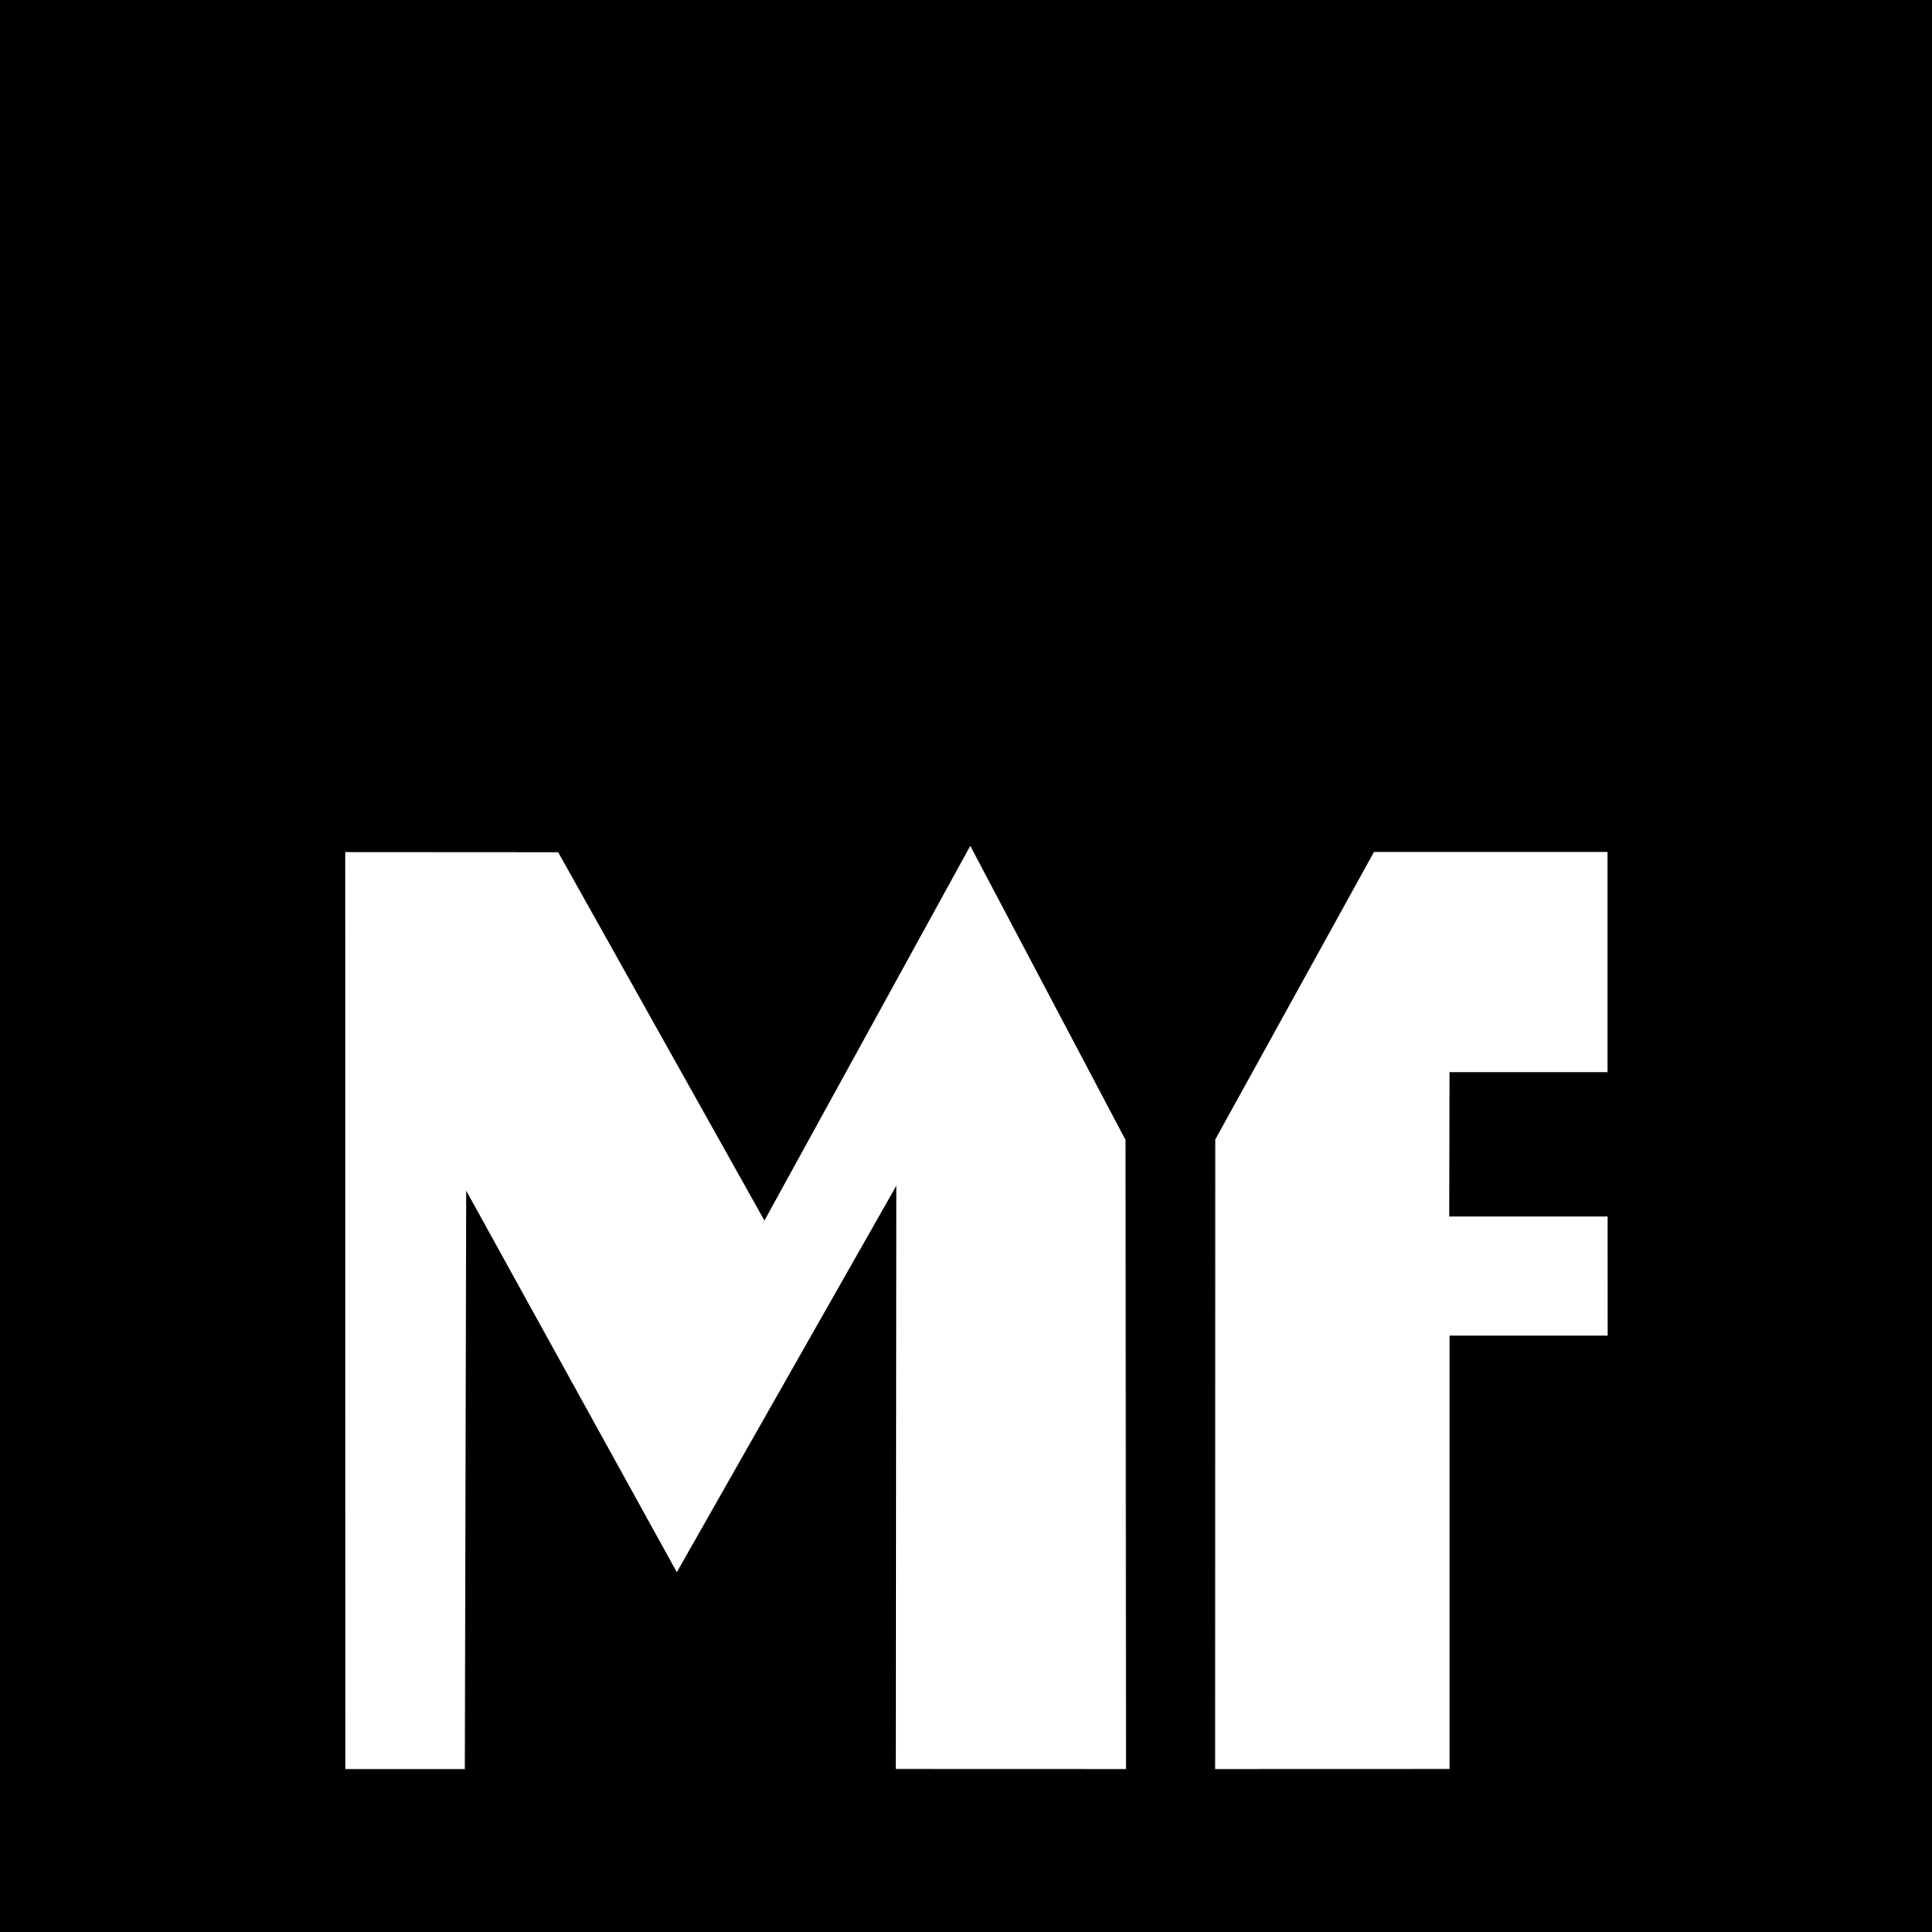 WMF Logo - WMF Logo PNG Transparent & SVG Vector - Freebie Supply